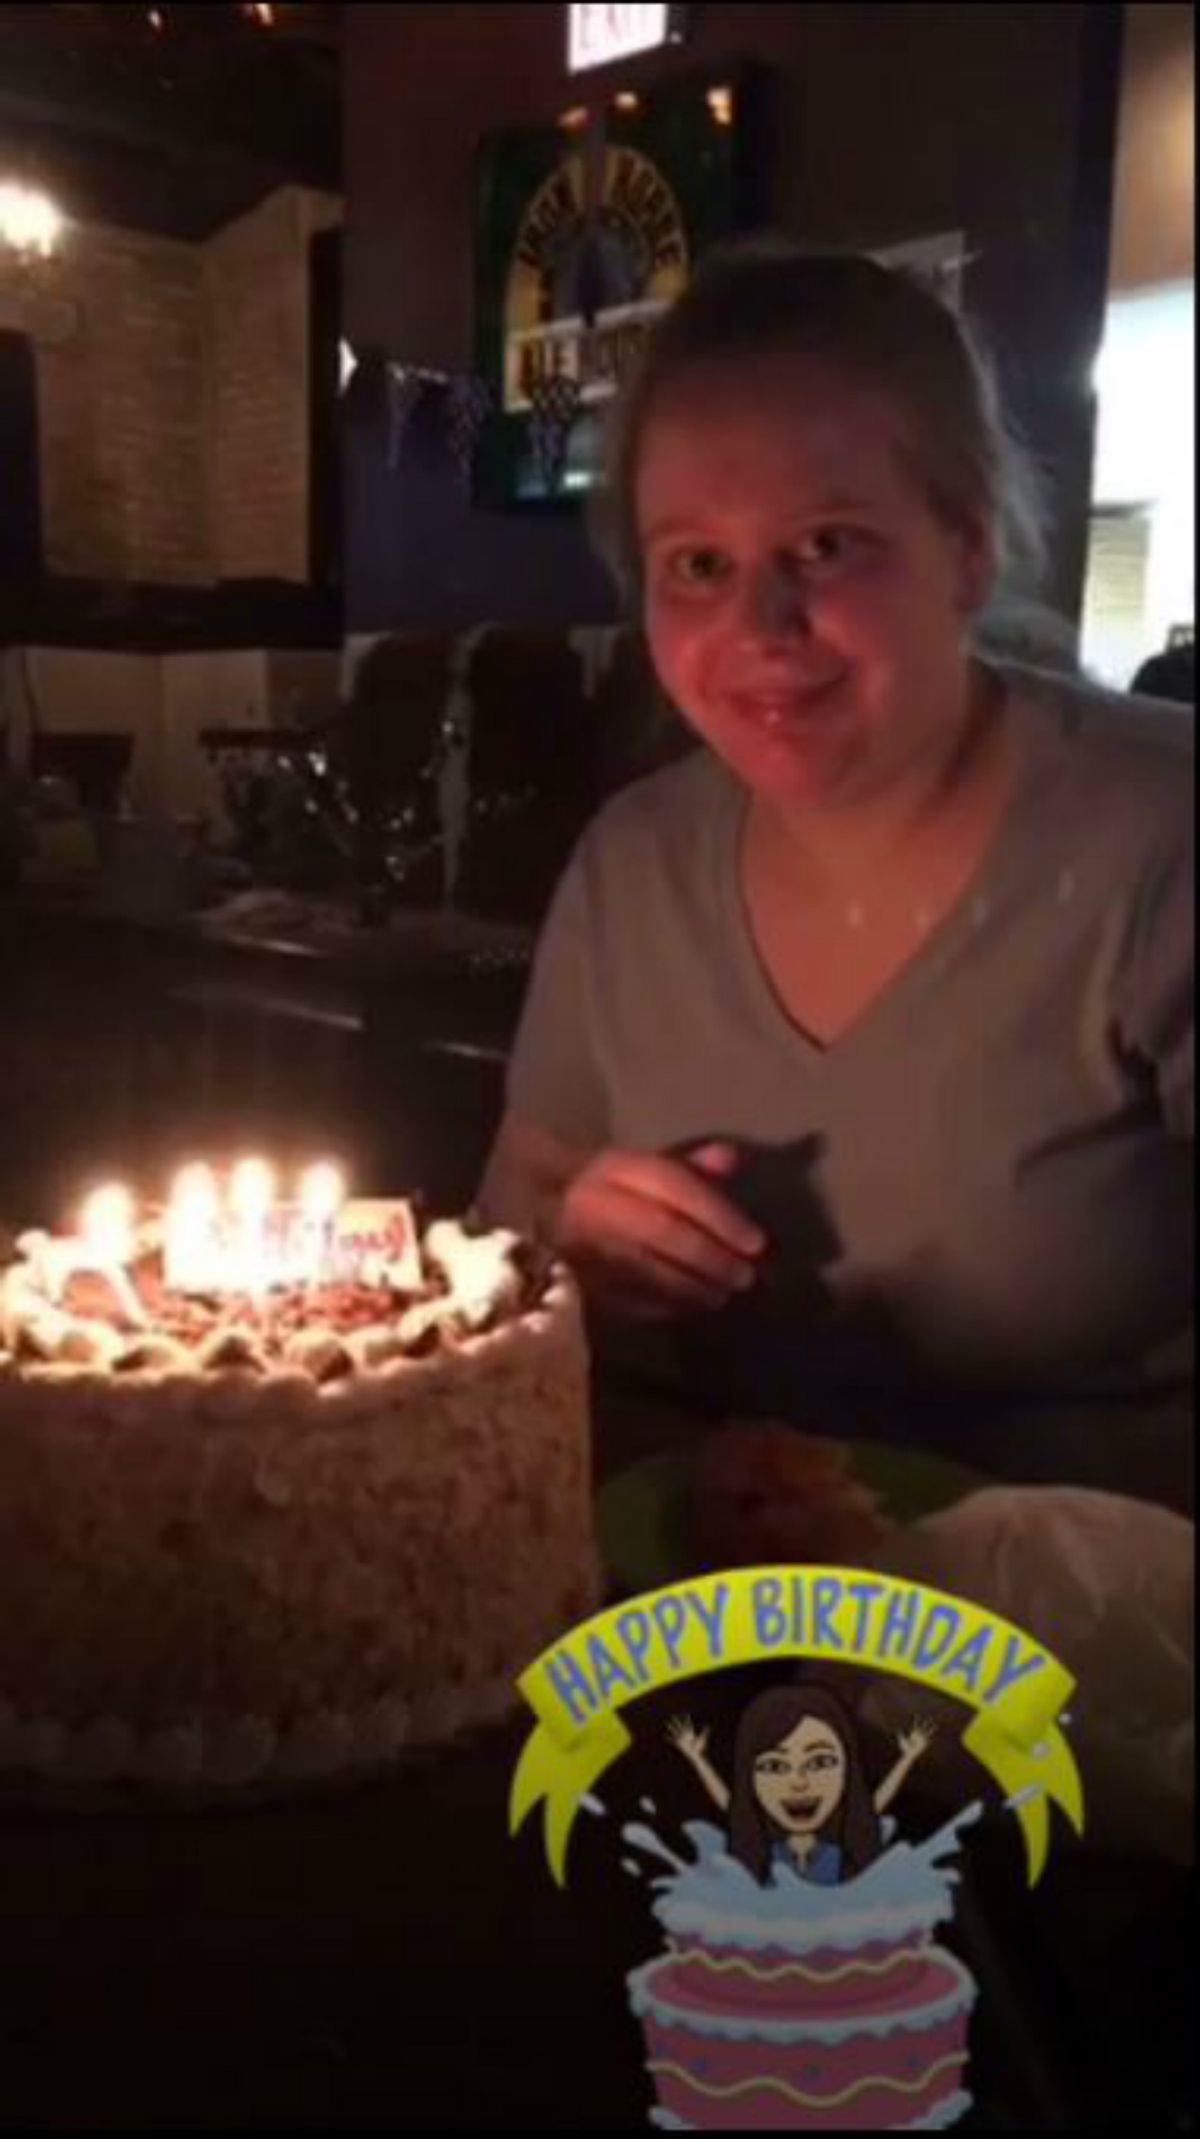 Sarah's Birthday